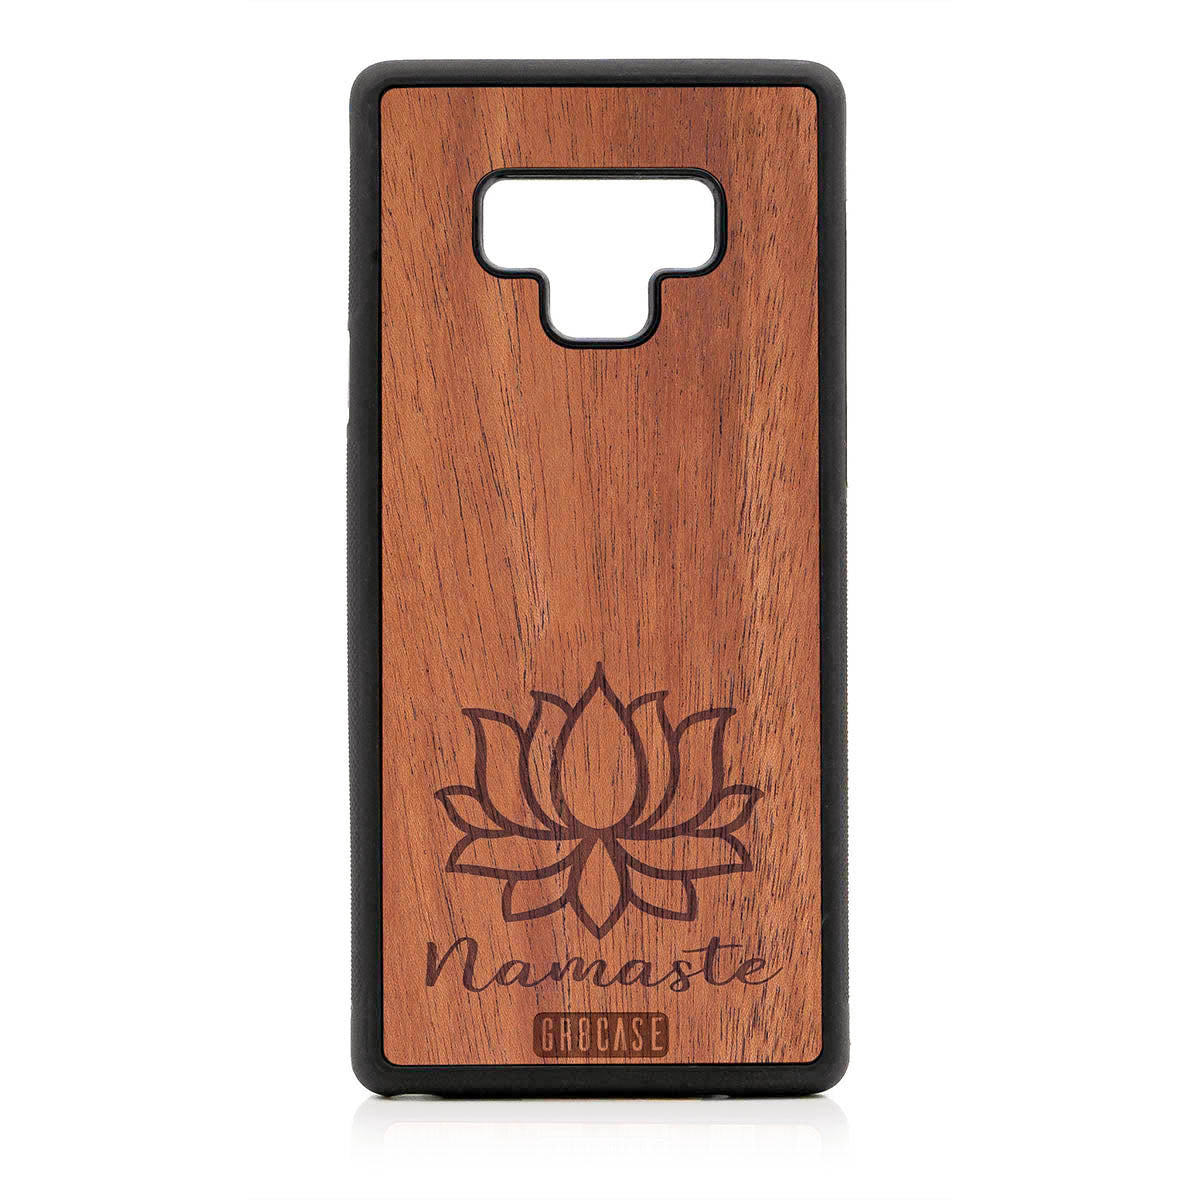 Namaste (Lotus Flower) Design Wood Case For Samsung Galaxy Note 9